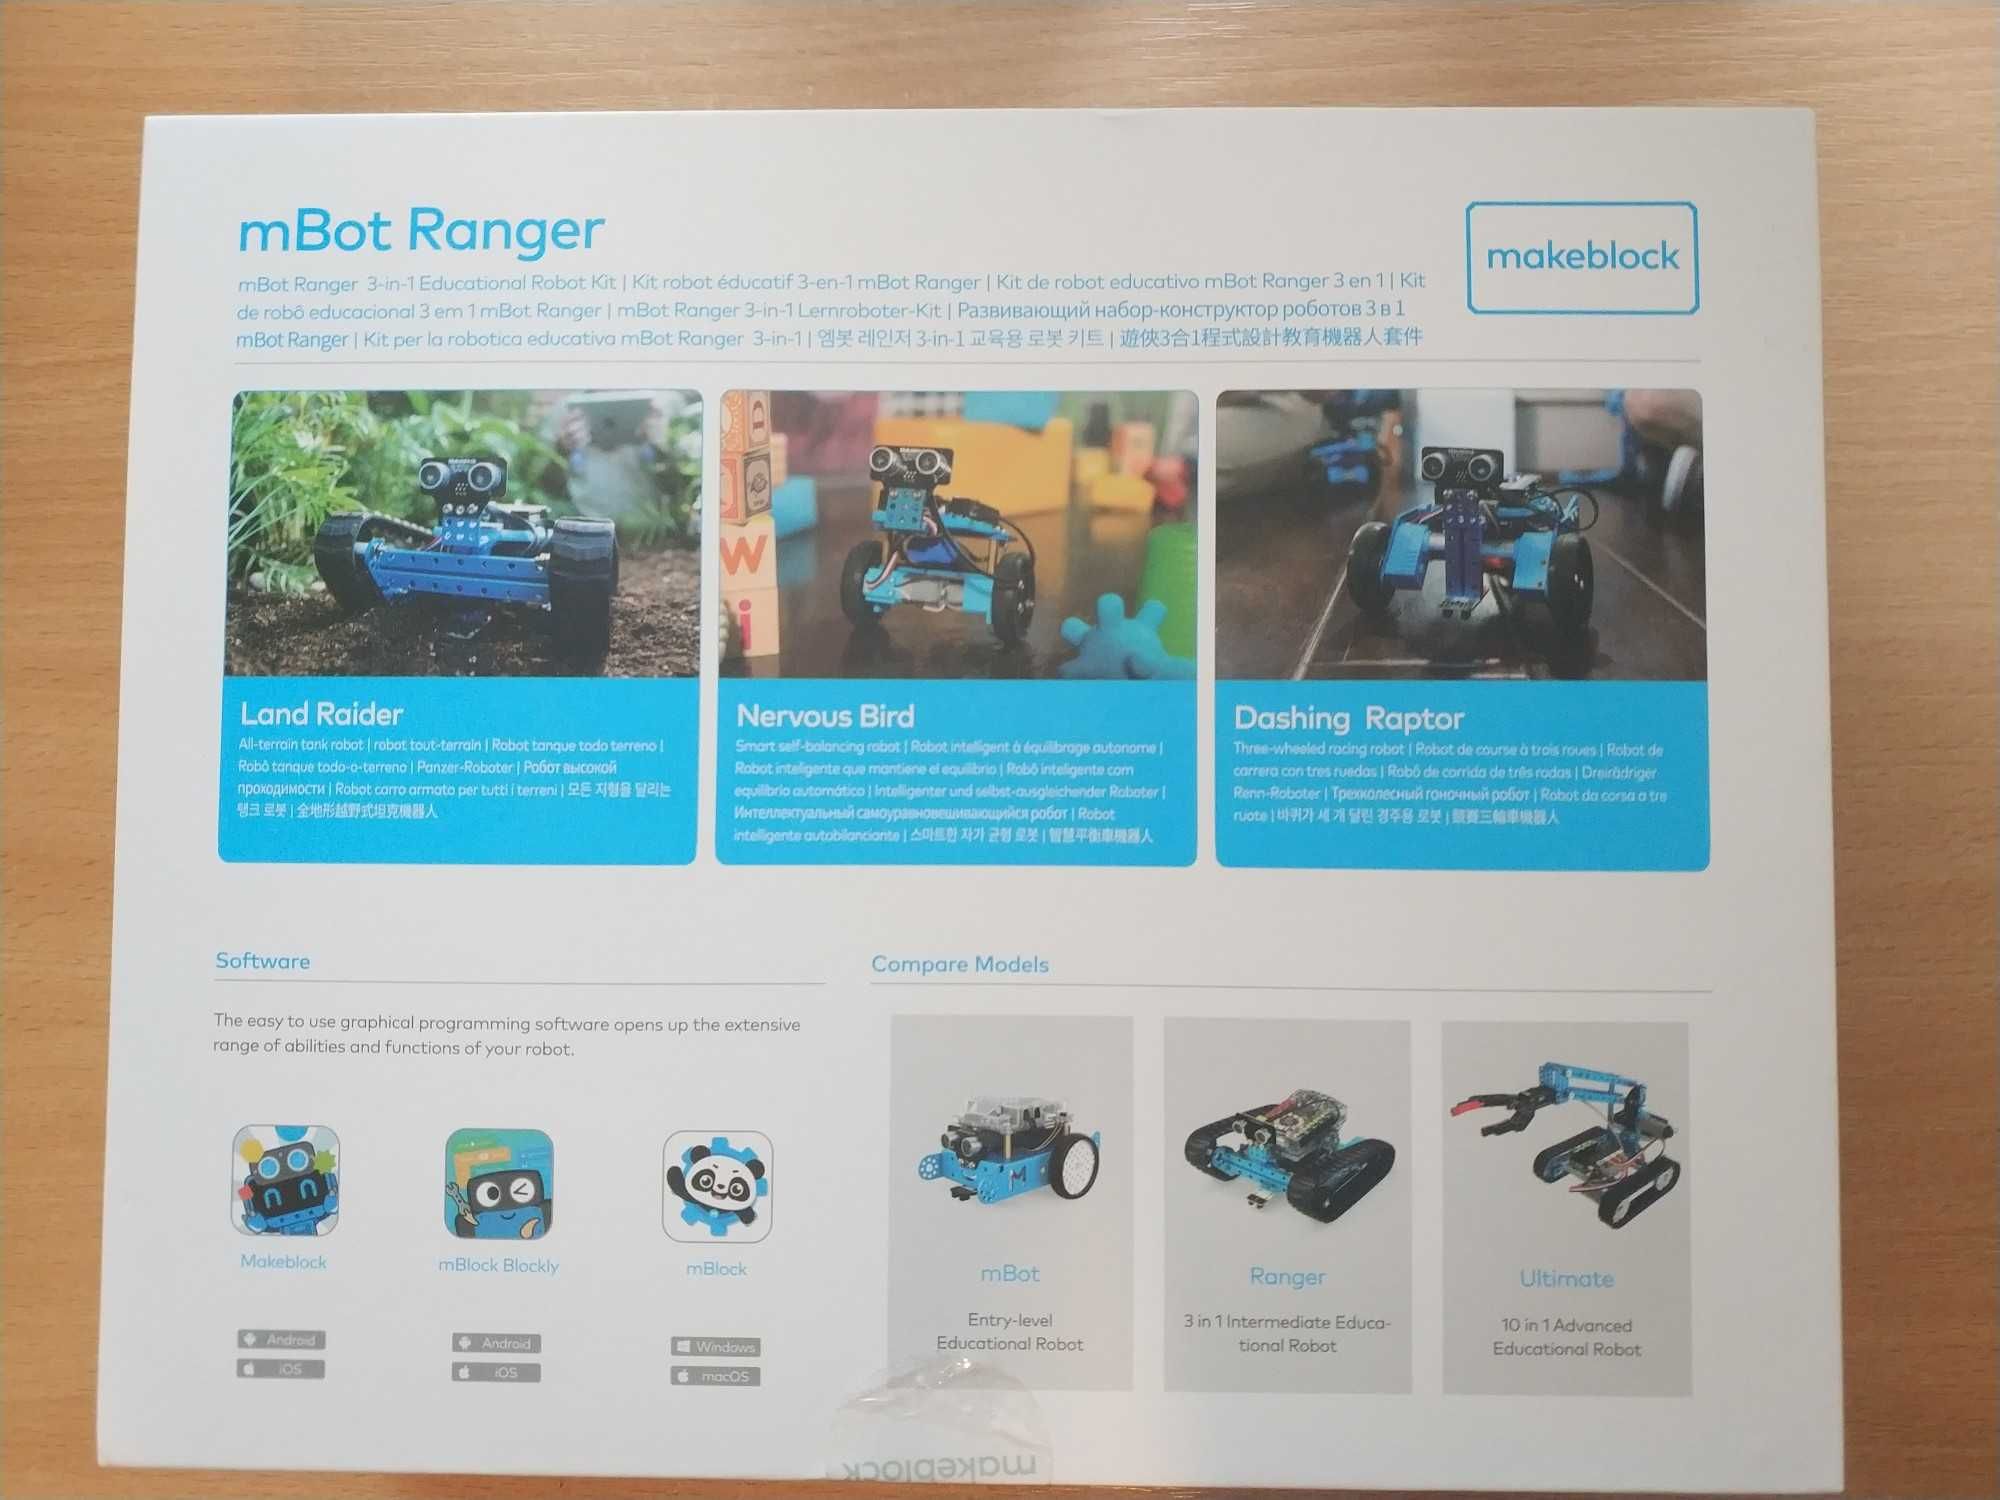 Makeblock mBot Ranger 3 in 1 Education Robot Kit